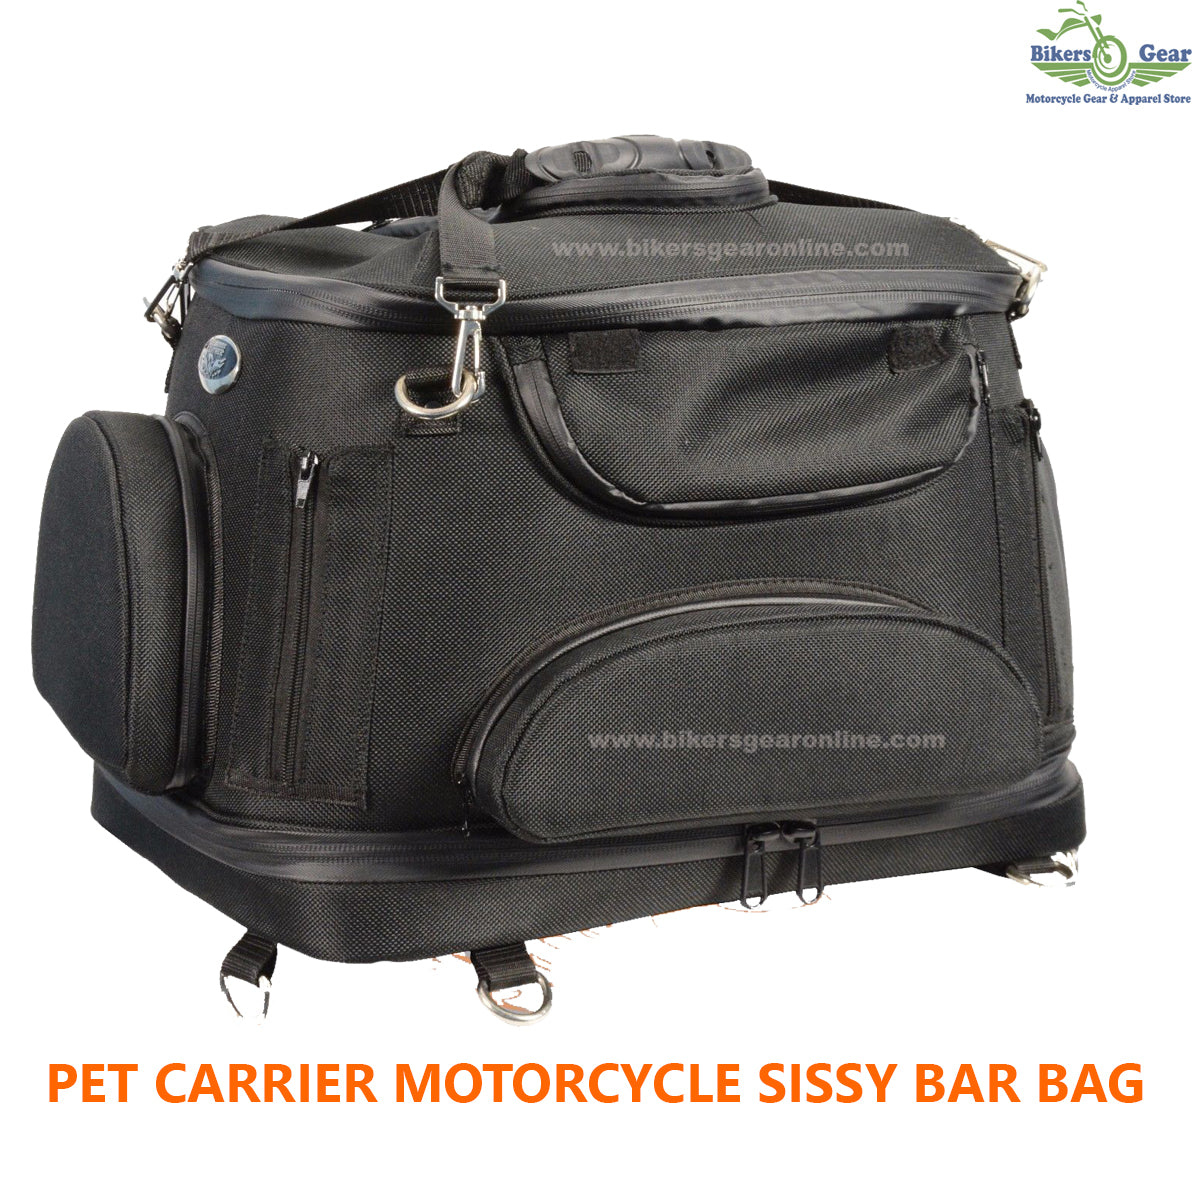 Heavy Duty Motorcycle Pet Carrier Sissy Bar Bag